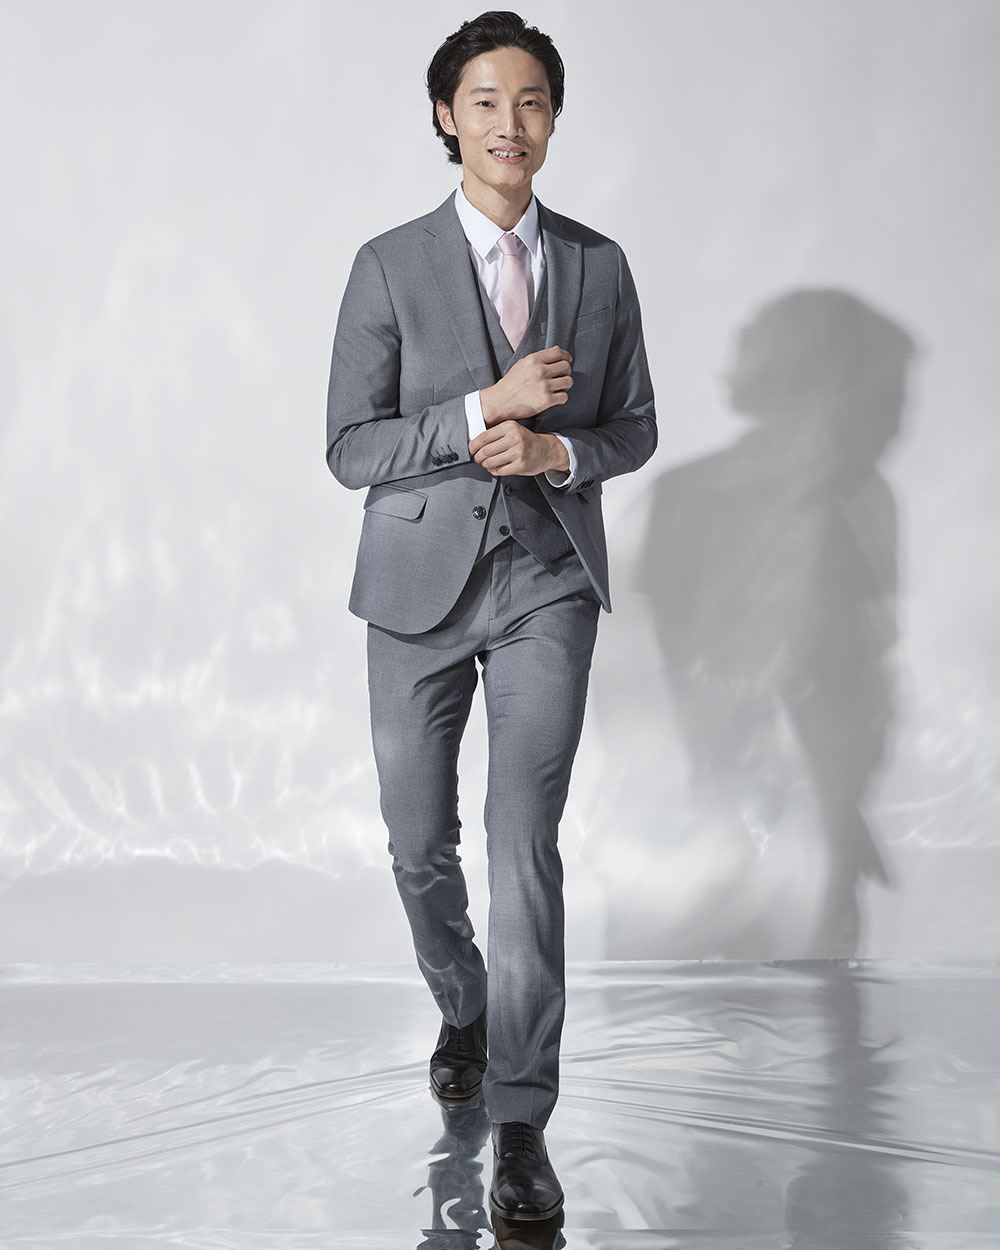 Essential Grey Suit Pant